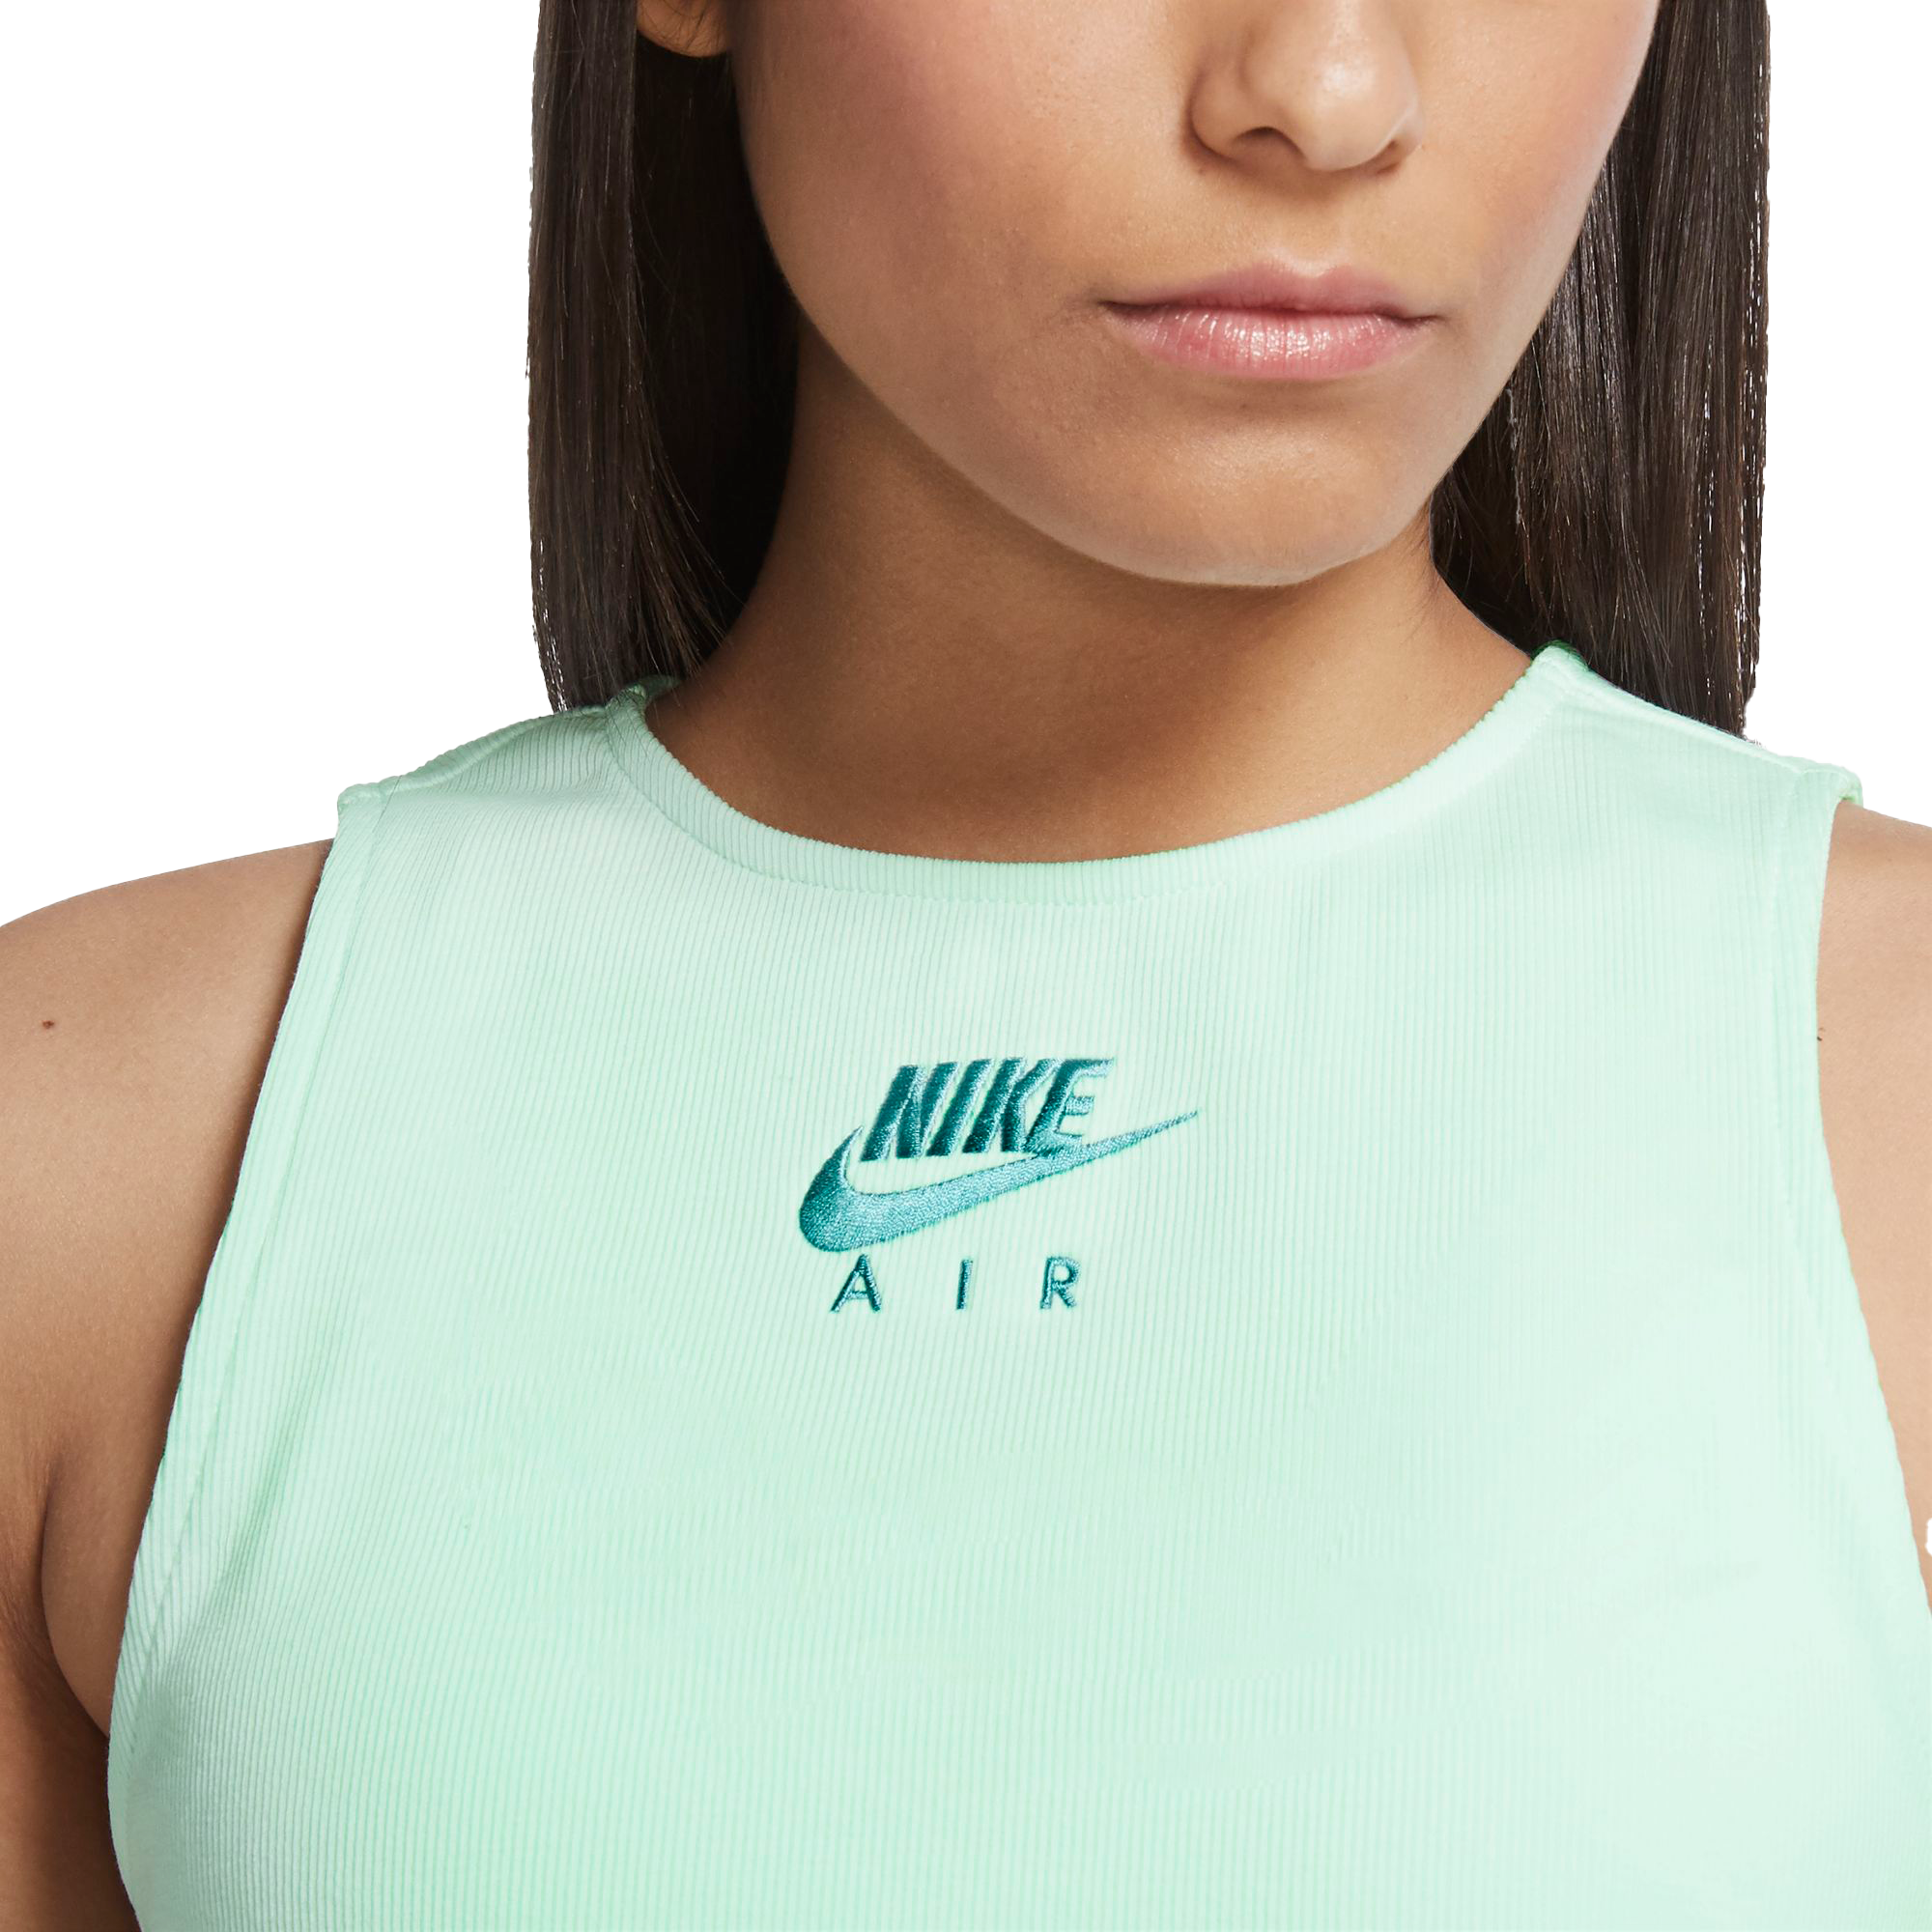 Nike Tank Tops, Nike Sleeveless Shirts